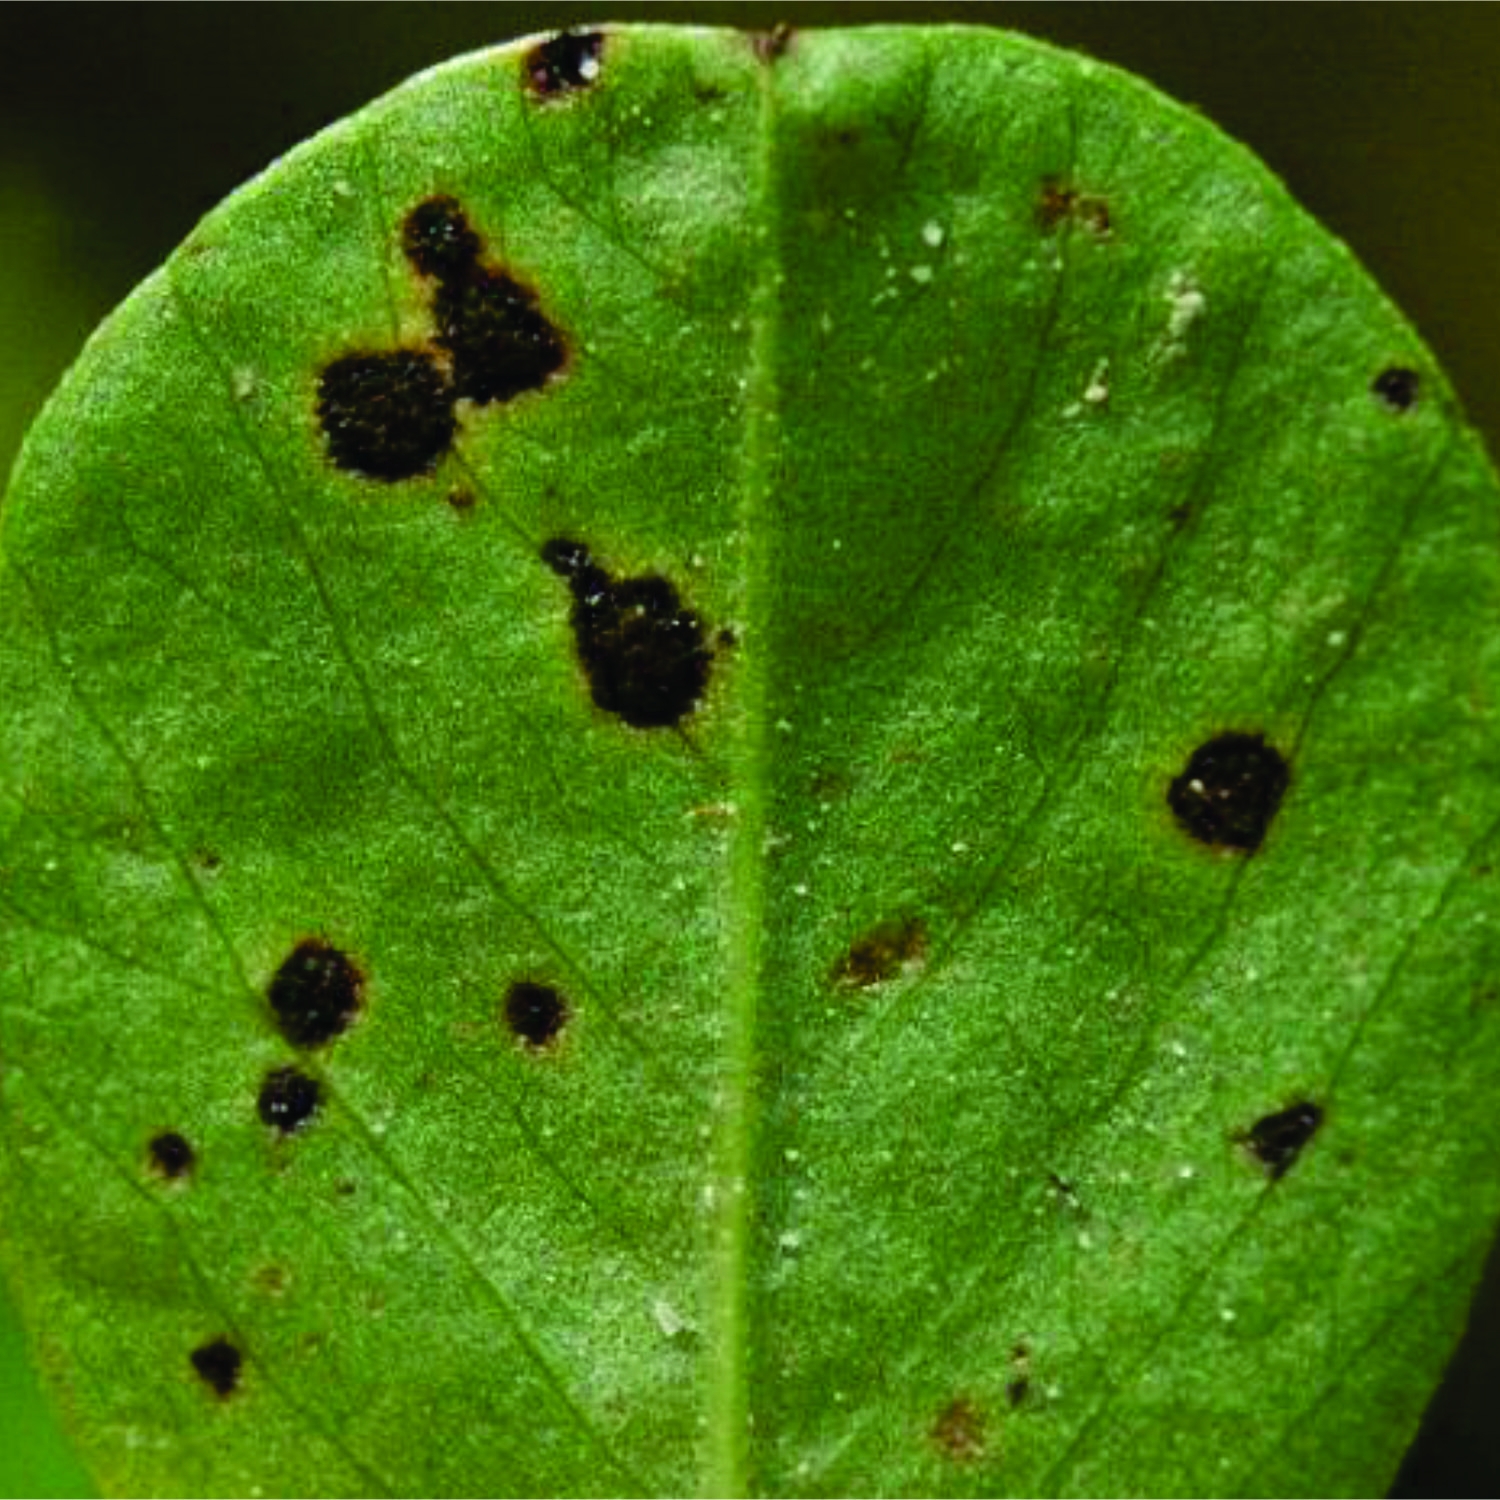 Leaf Disease Classification using OpenCV, Python